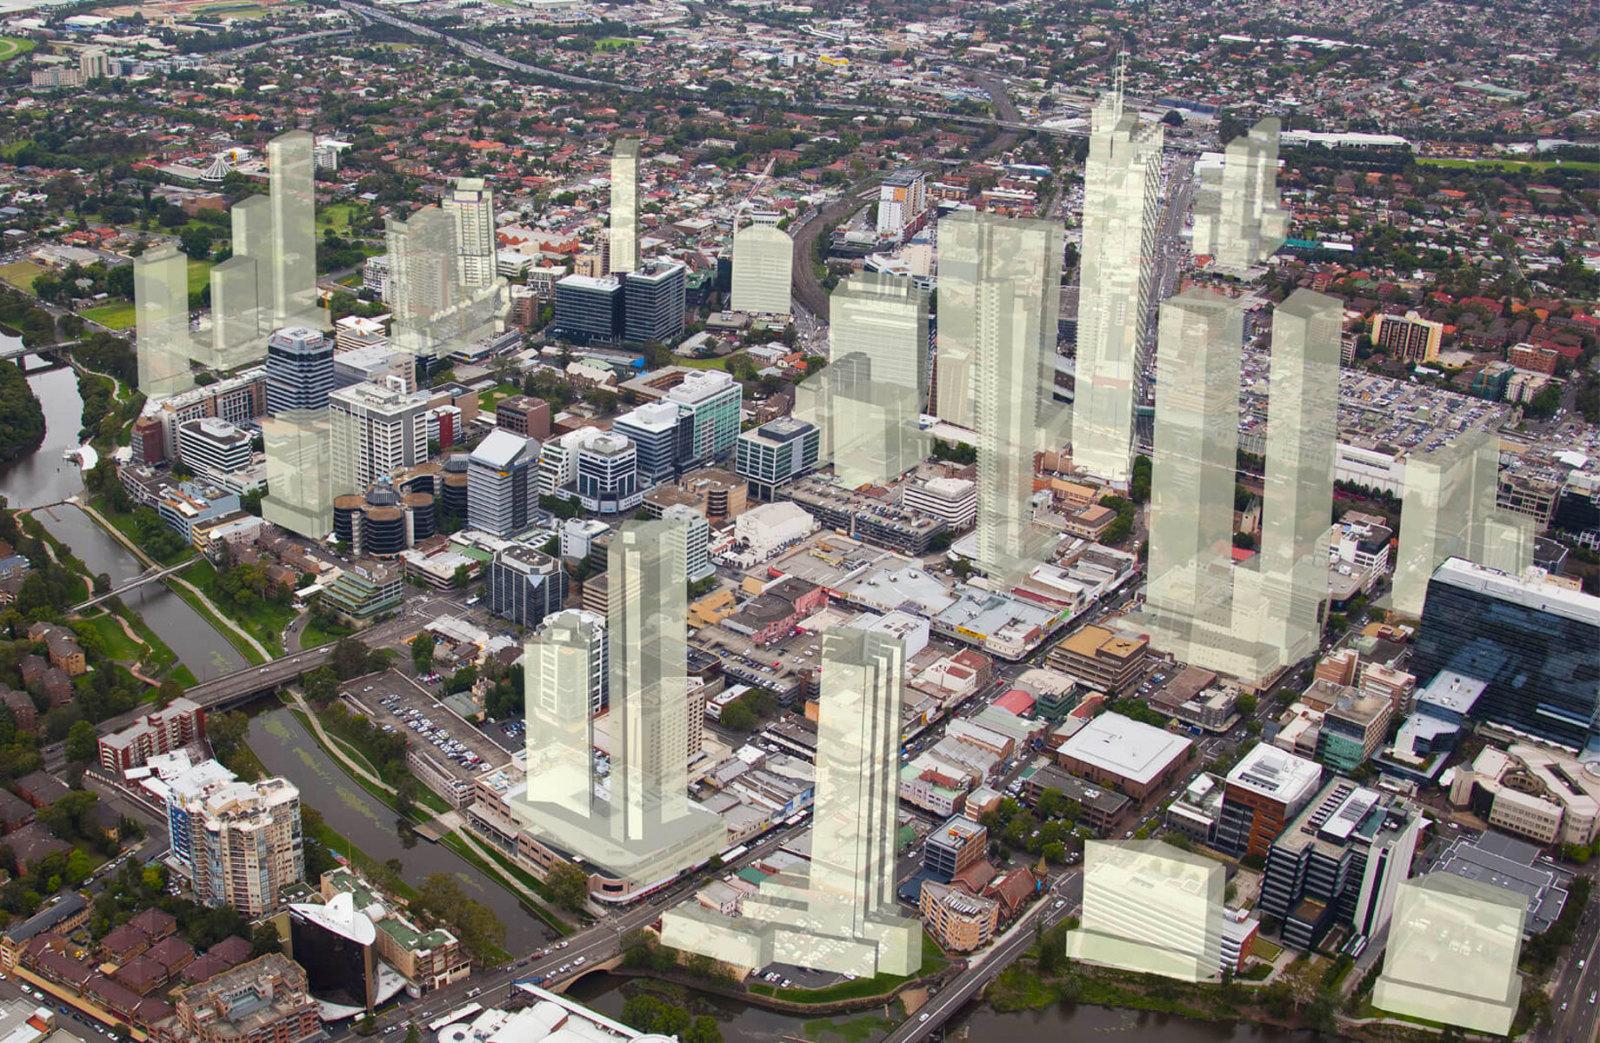 Parramatta Redraws Rules for High-Rise Development Boom
